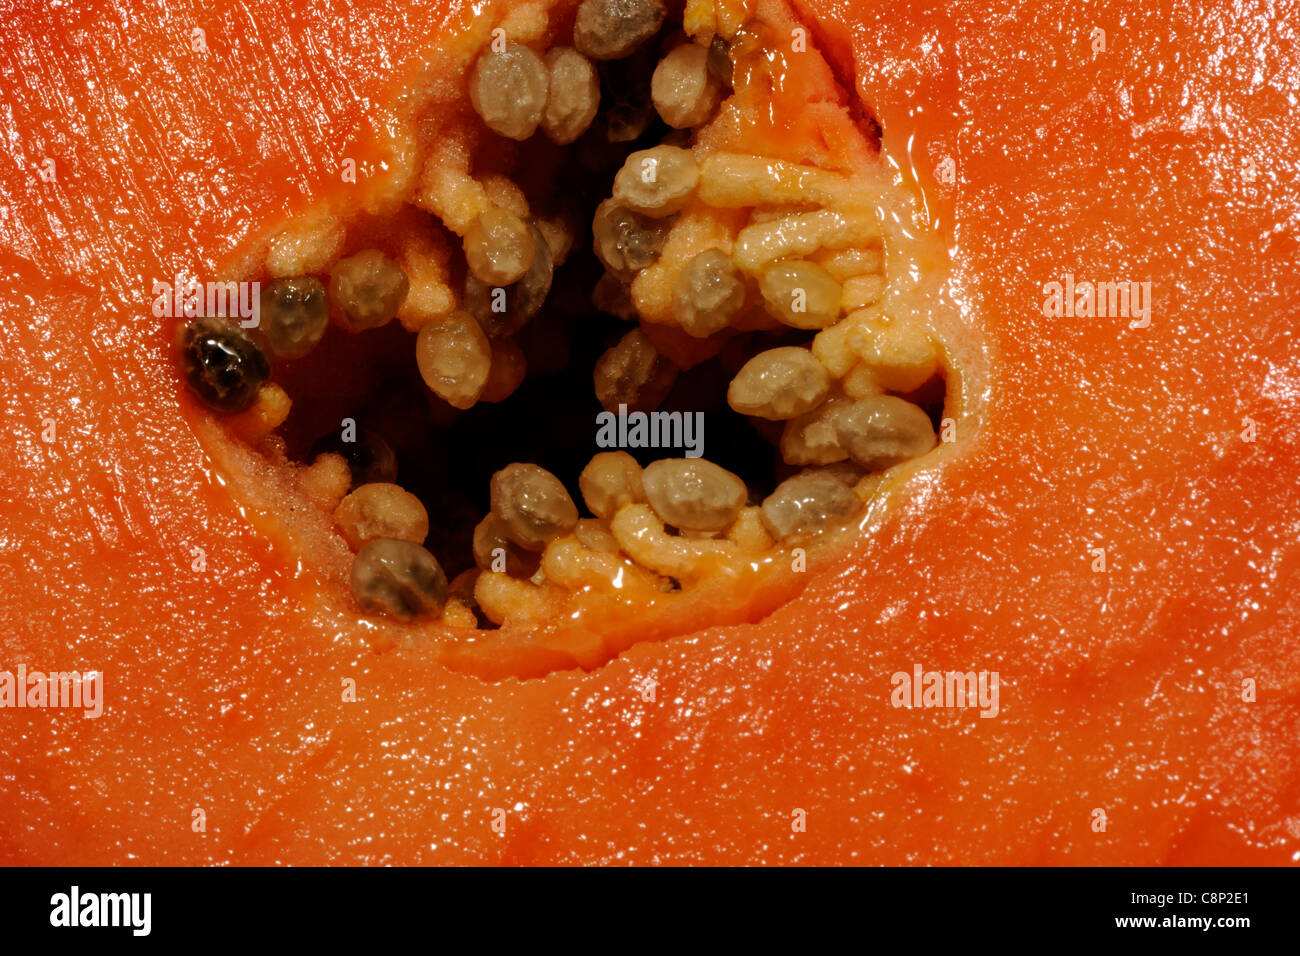 Papaya (Carica papaya) section showing seeds Stock Photo